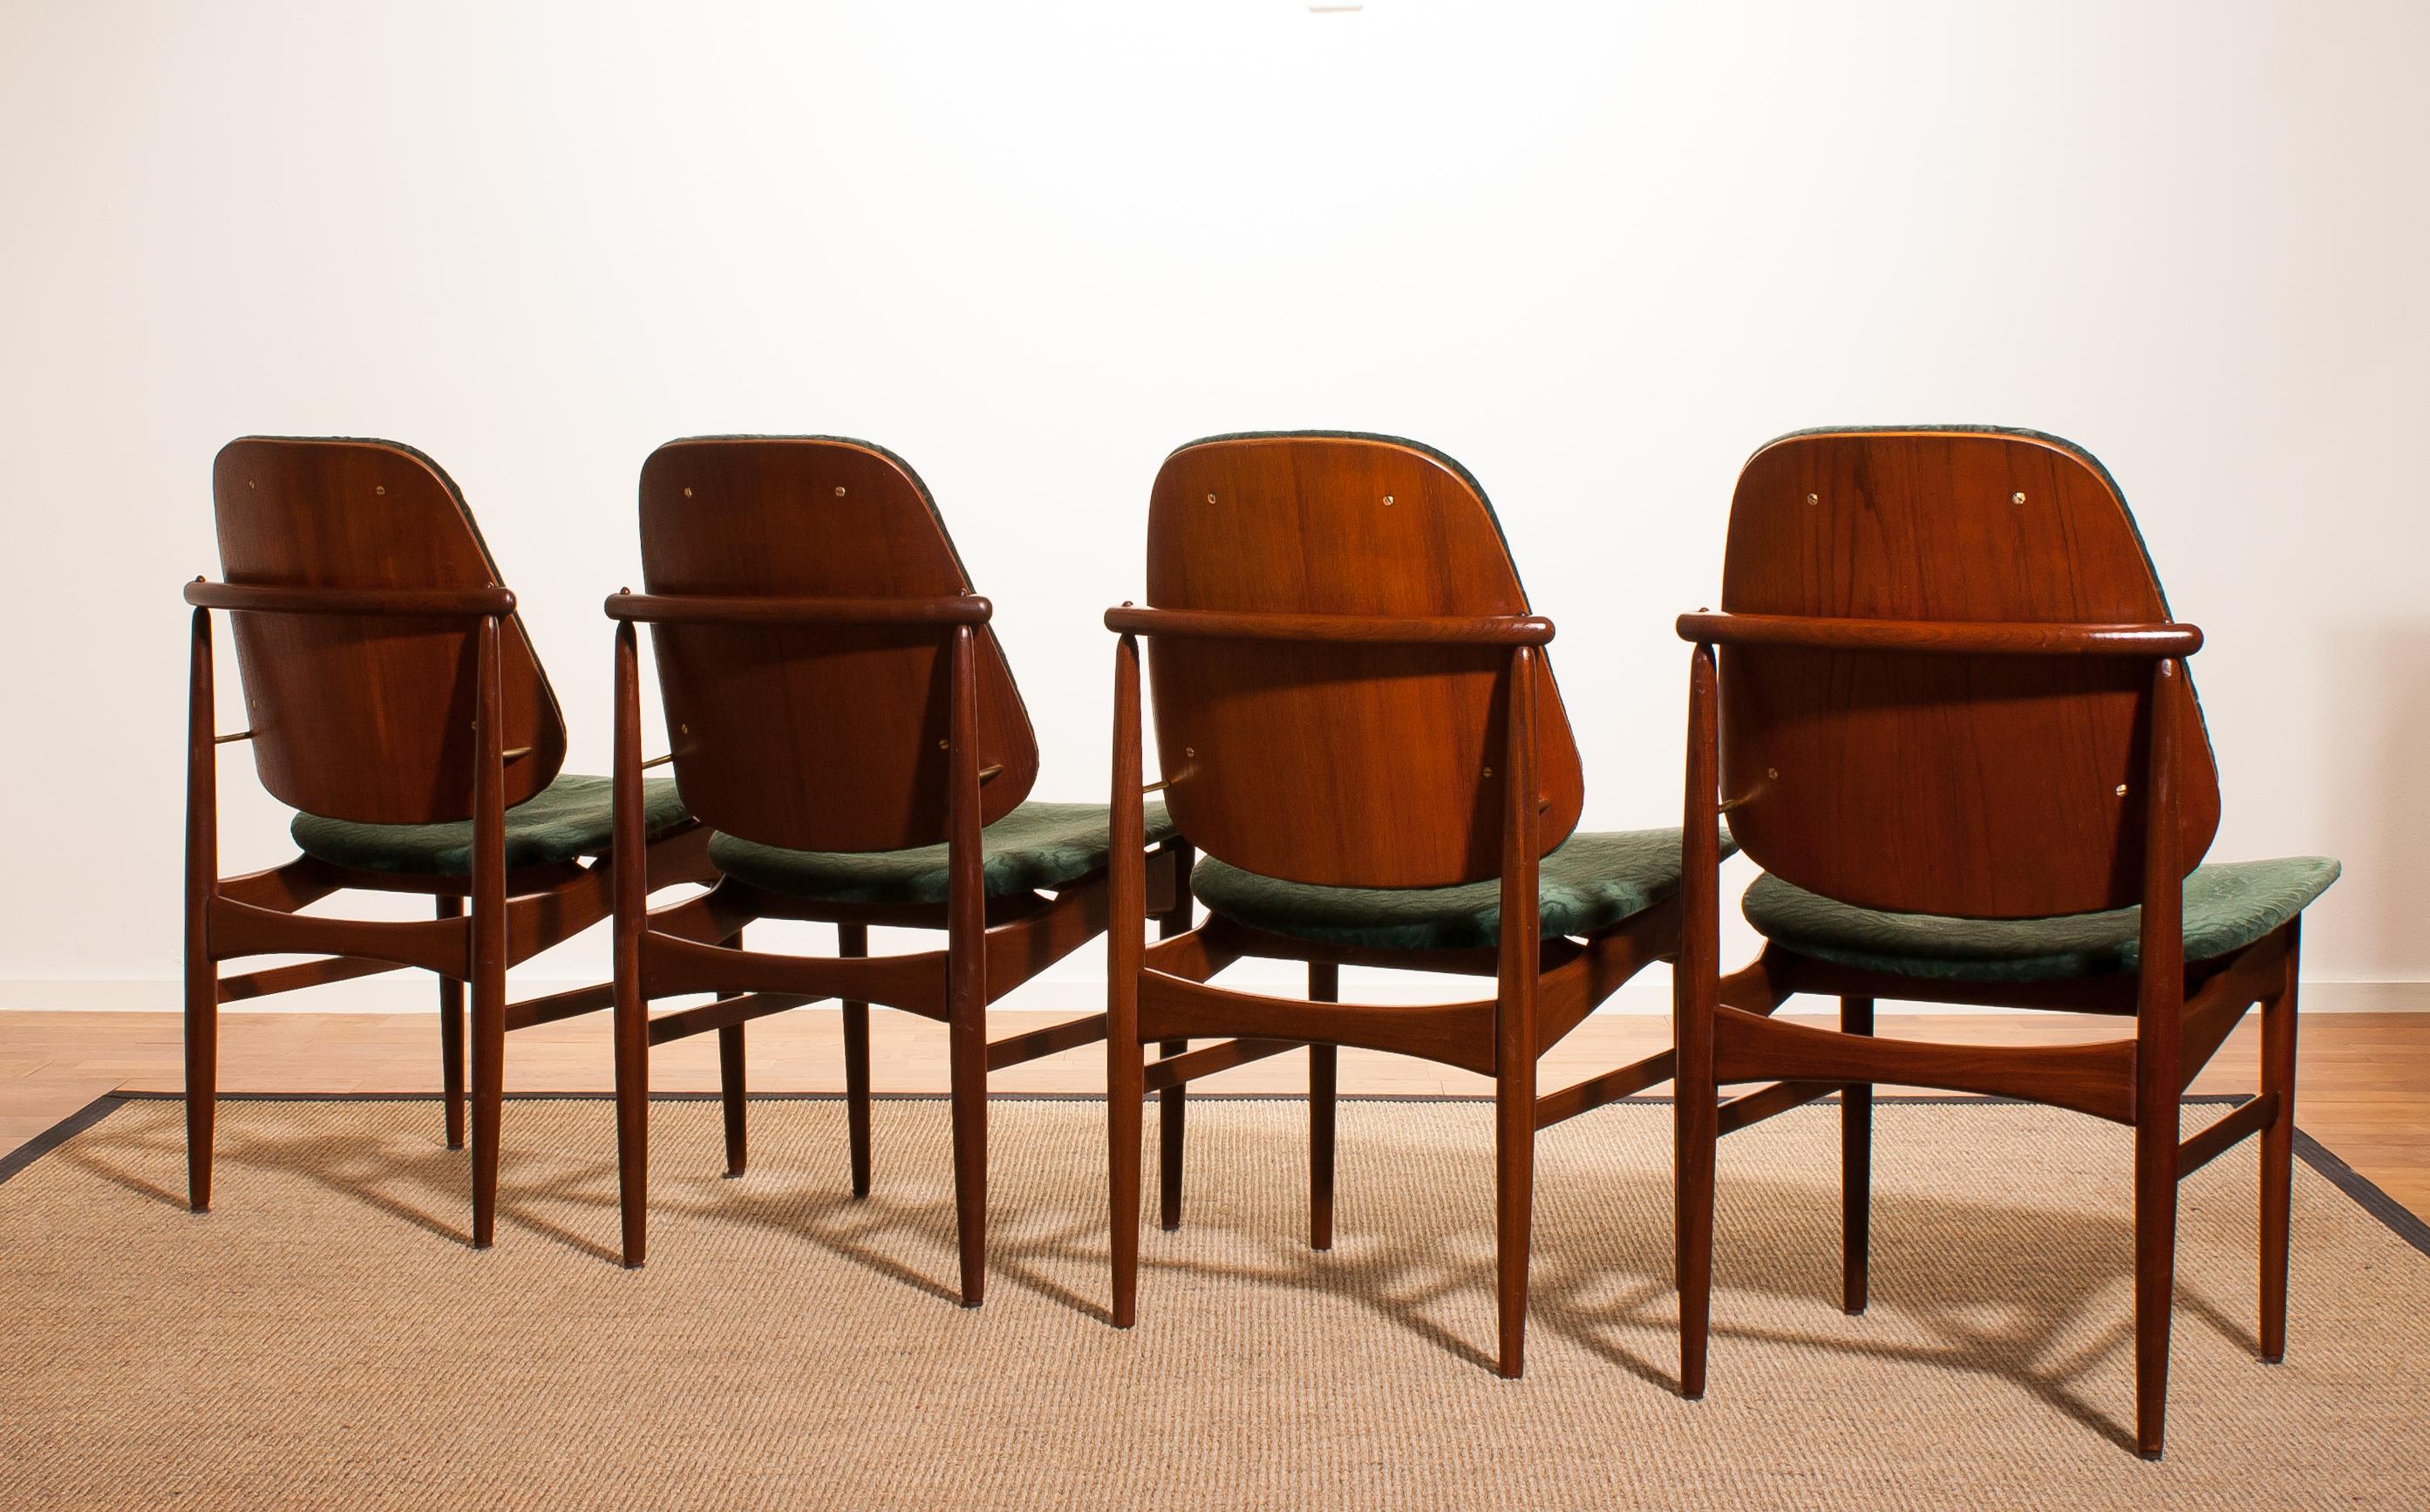 Mid-20th Century Set of Four Teak Dining Chairs Designed by Arne Vodder for France & Daverkosen